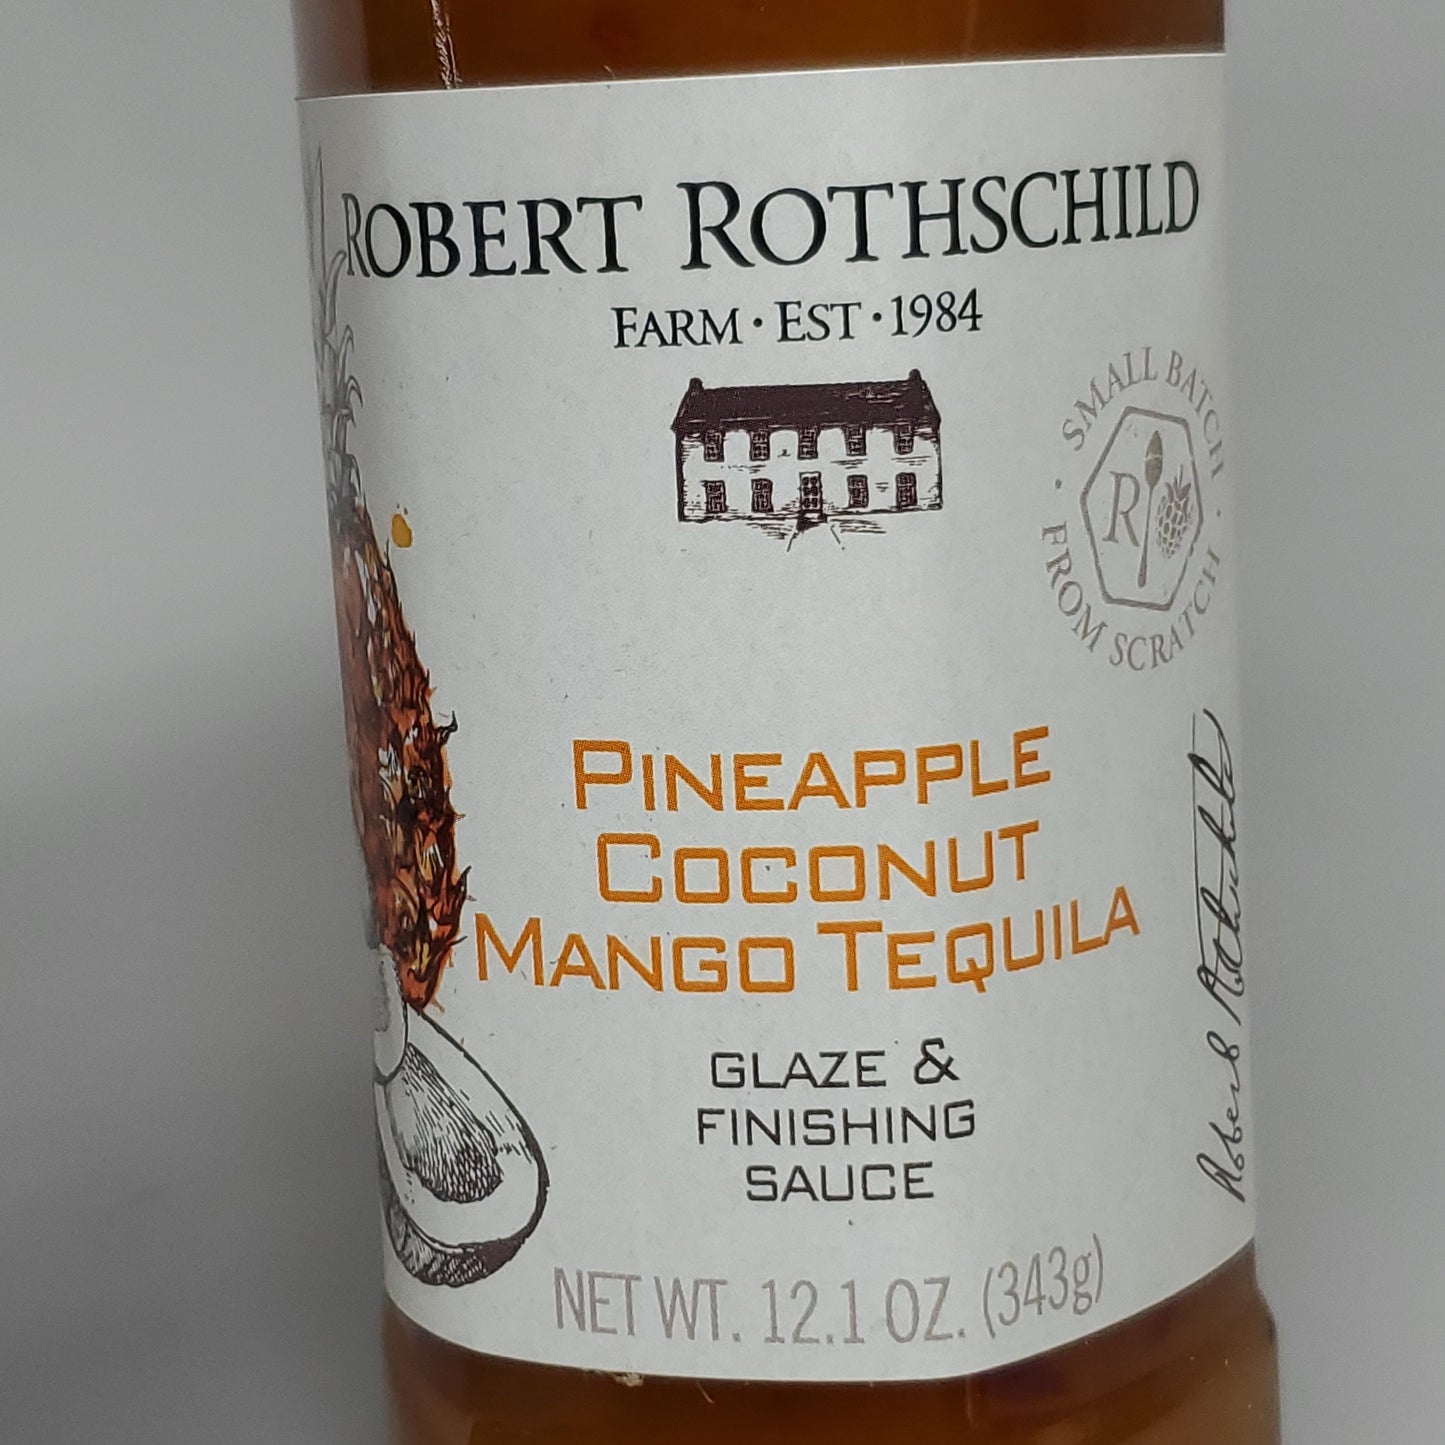 ZA@ ROBERT ROTHSCHILD 6-PK of Pineapple Coconut Mango Tequila Glaze & Finishing Sauce 12.1 Oz 06/23 C